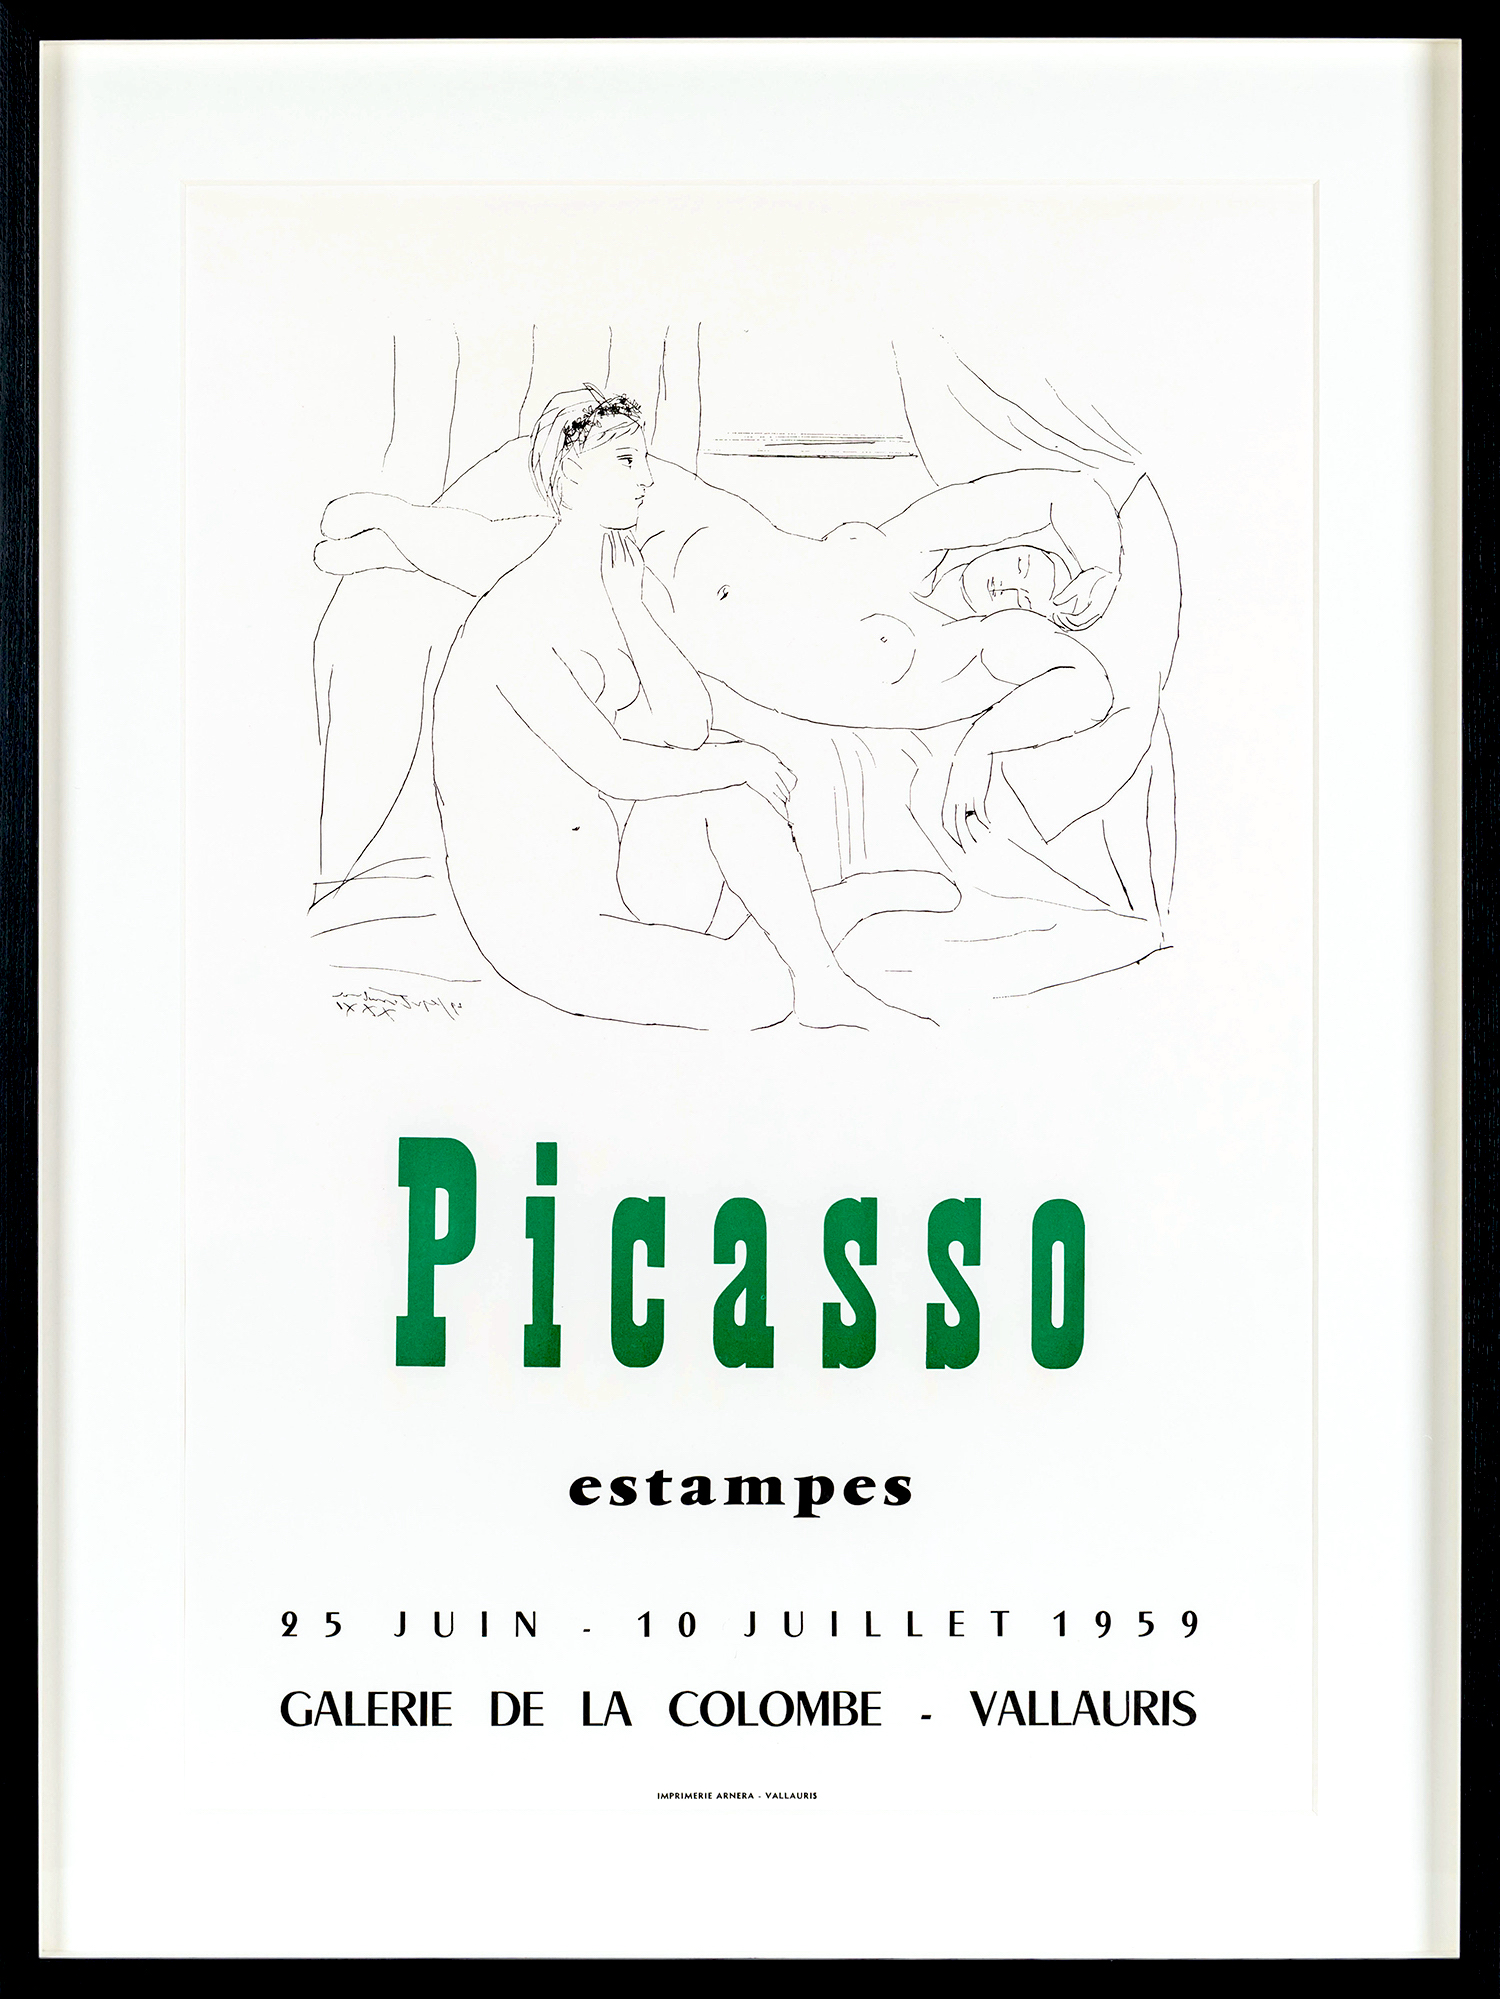 Picasso estampes, 1959